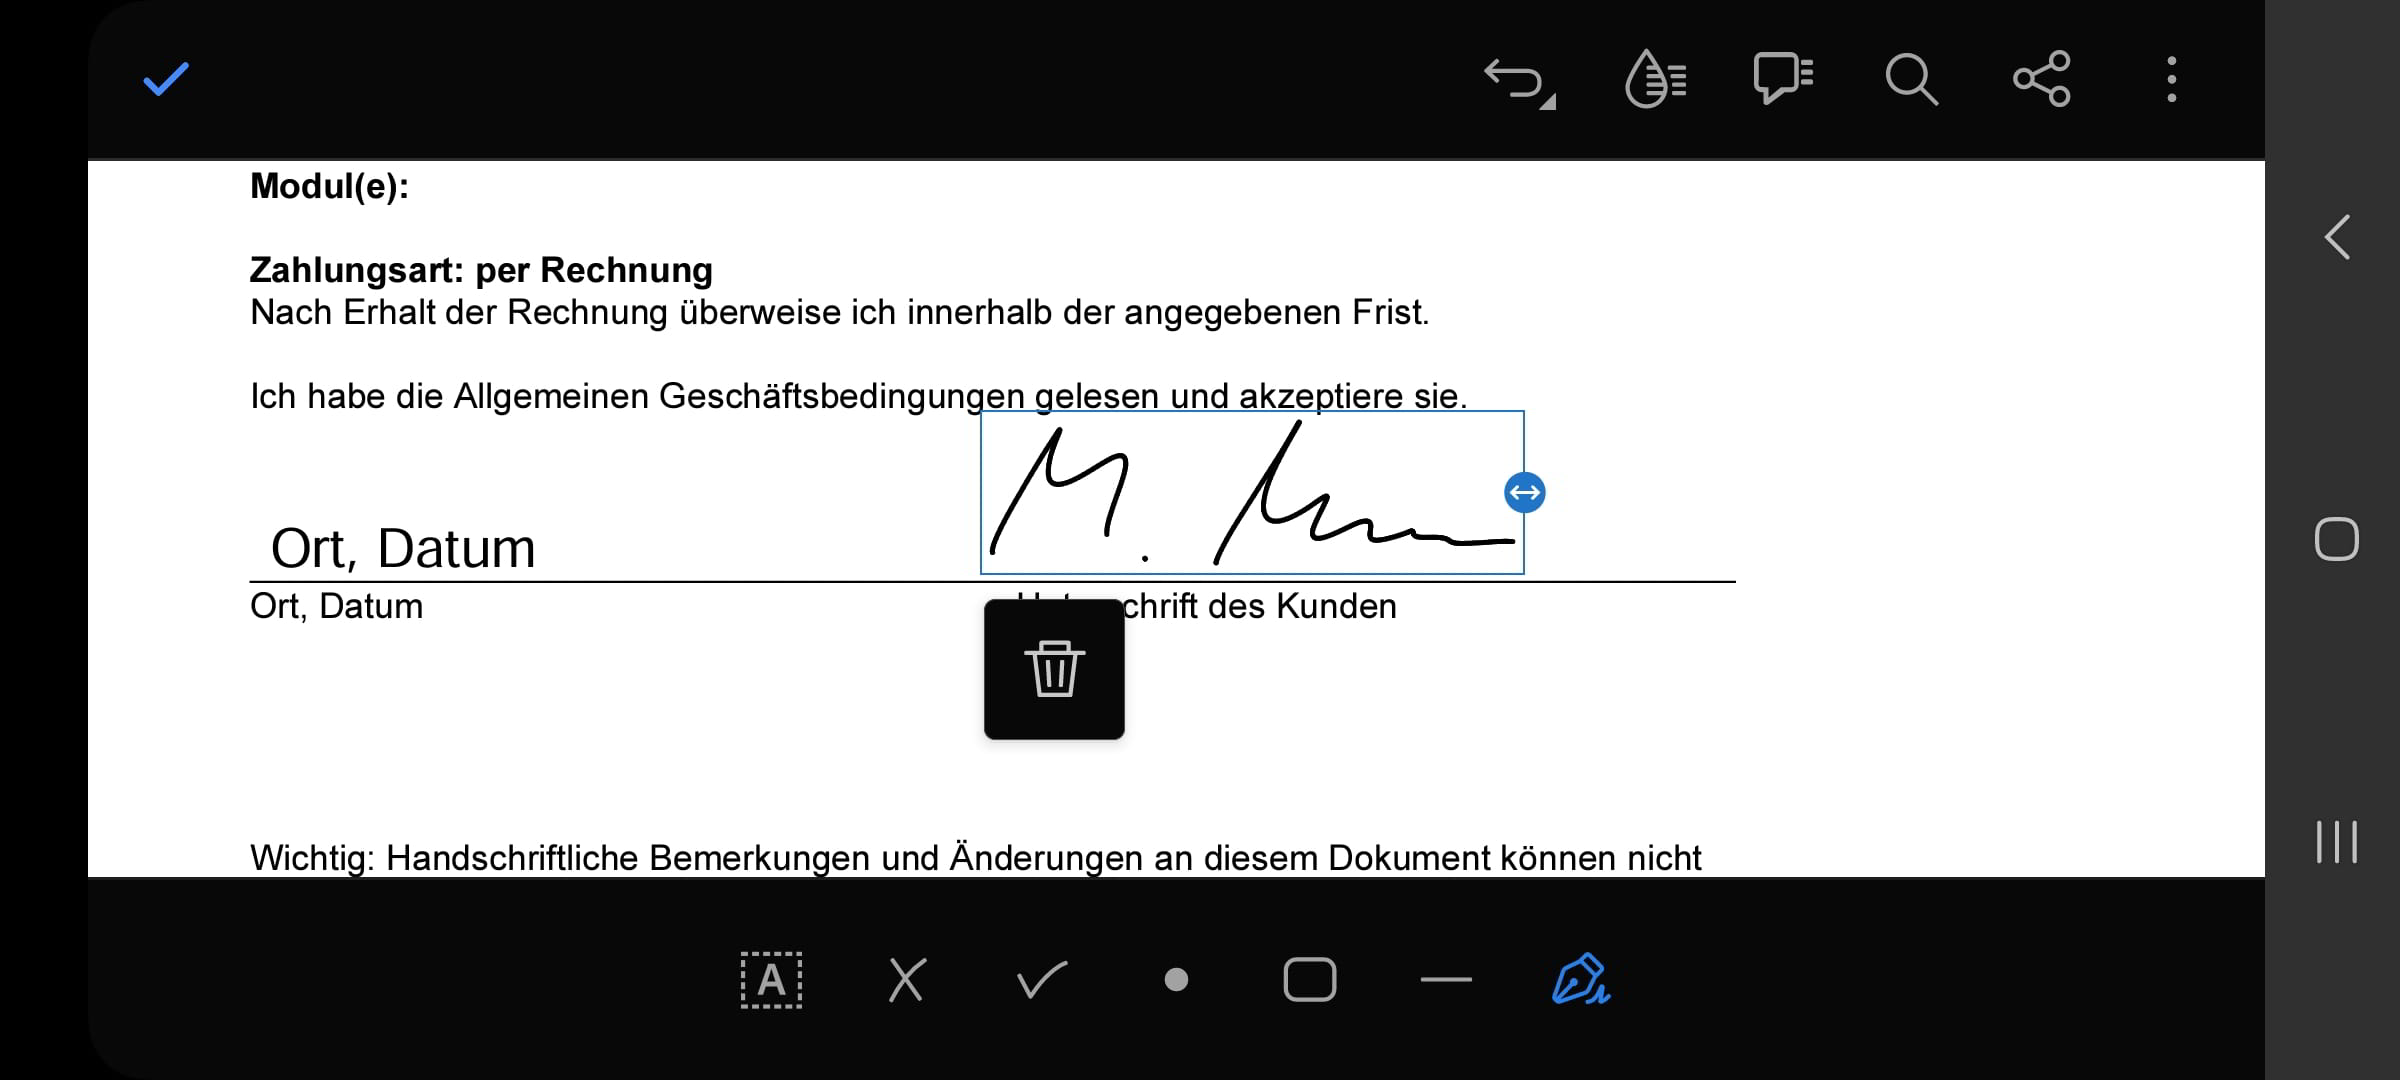 Dokument digital unterschreiben - In Mobile App signieren